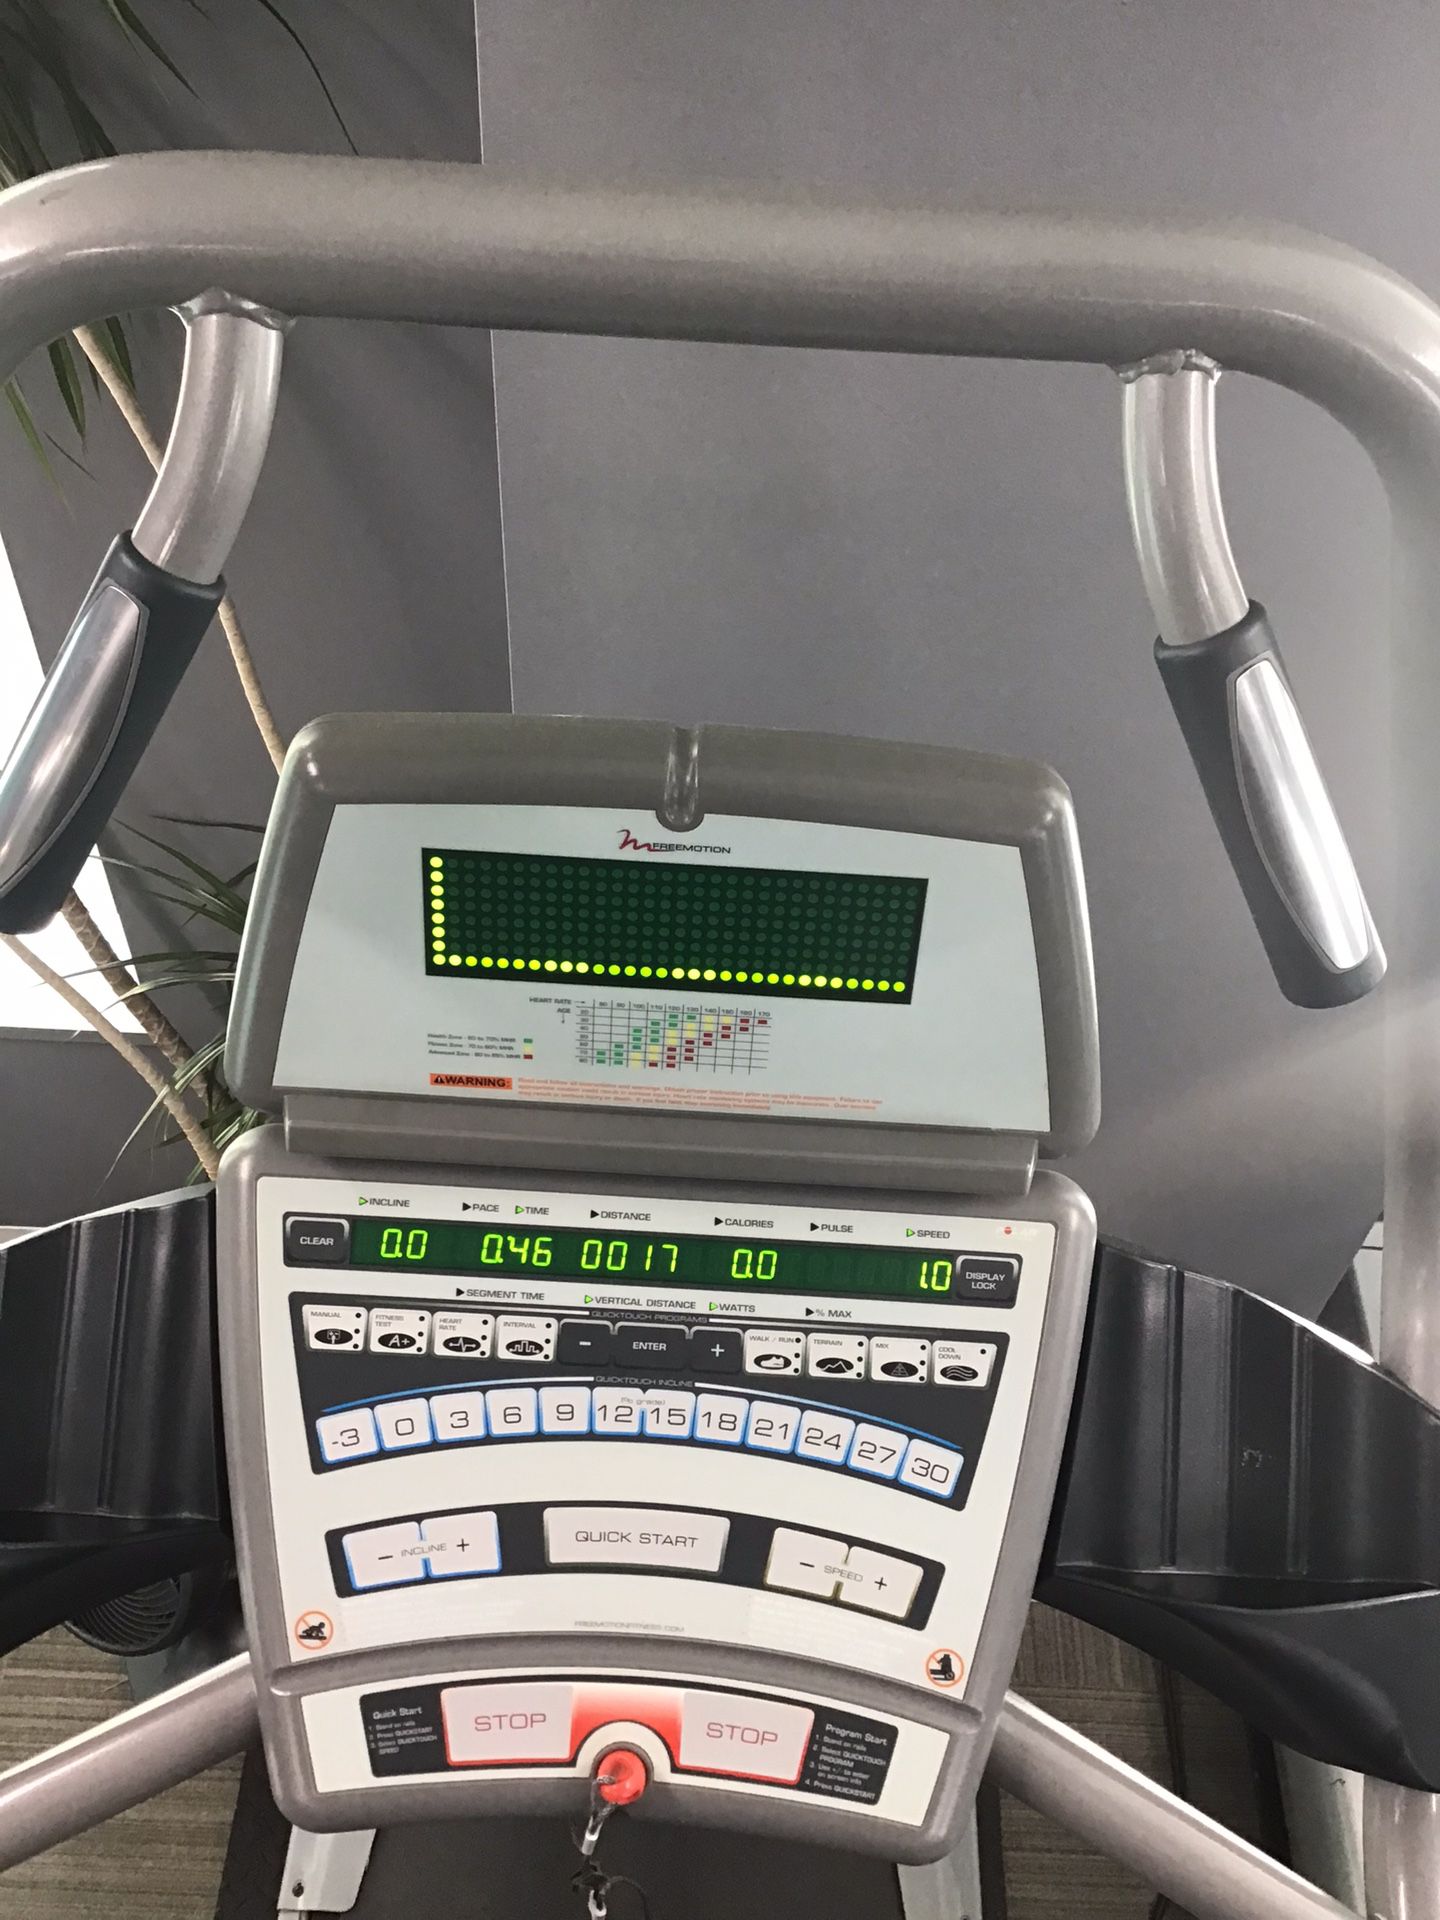 Free motion Incline Treadmill